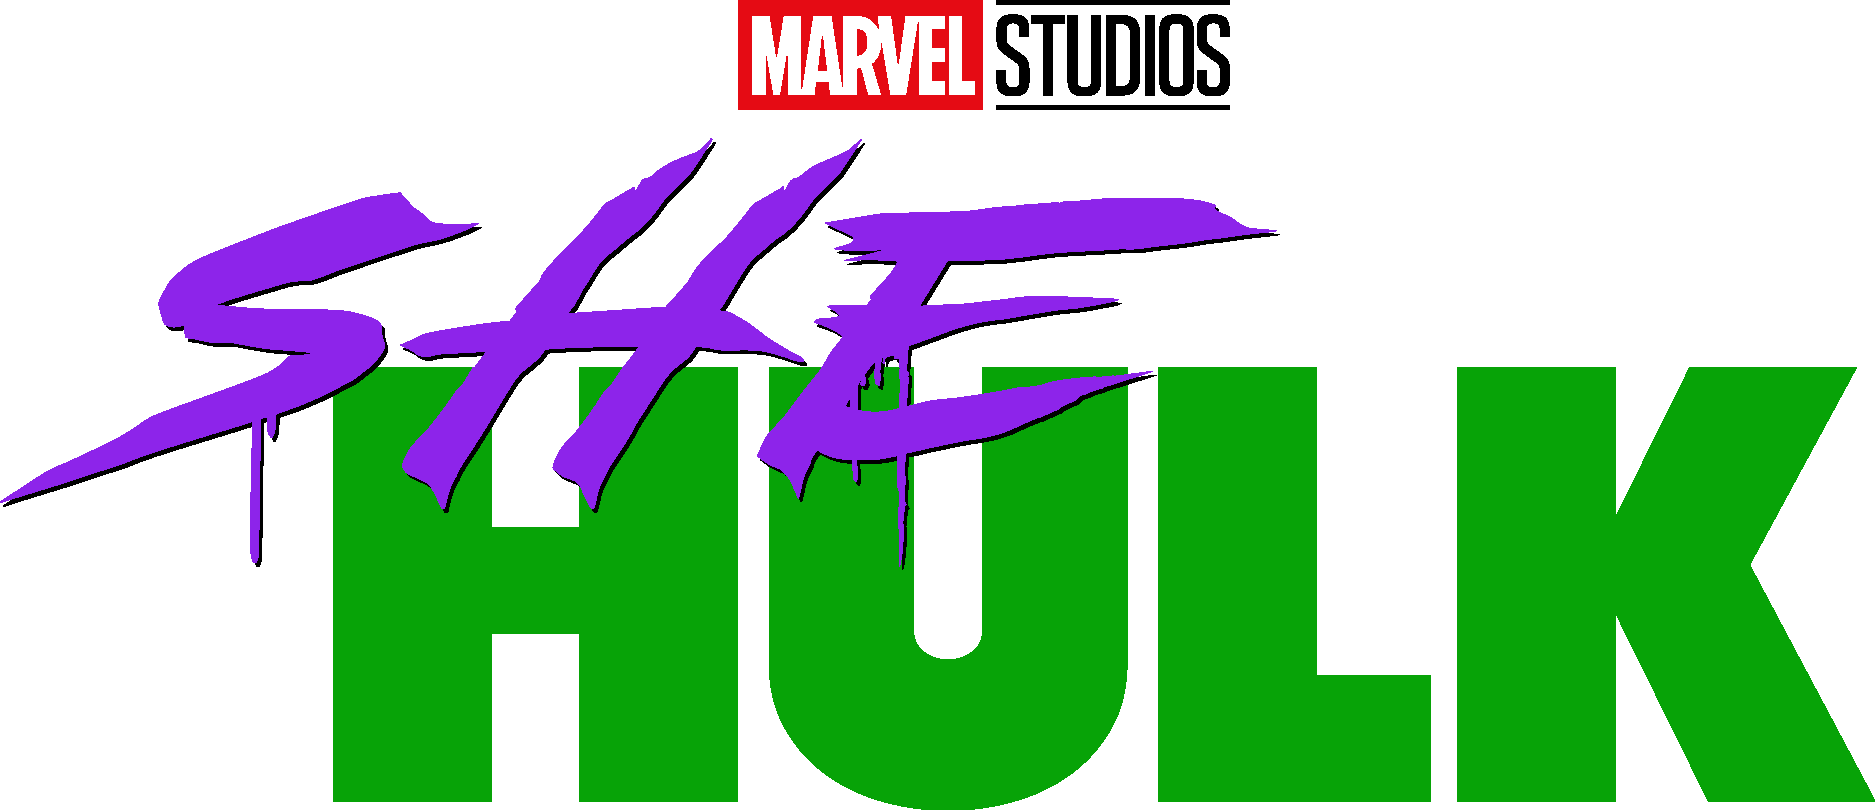 Download hulk logo zT8ex High quality free Dxf files, Svg, Cdr an